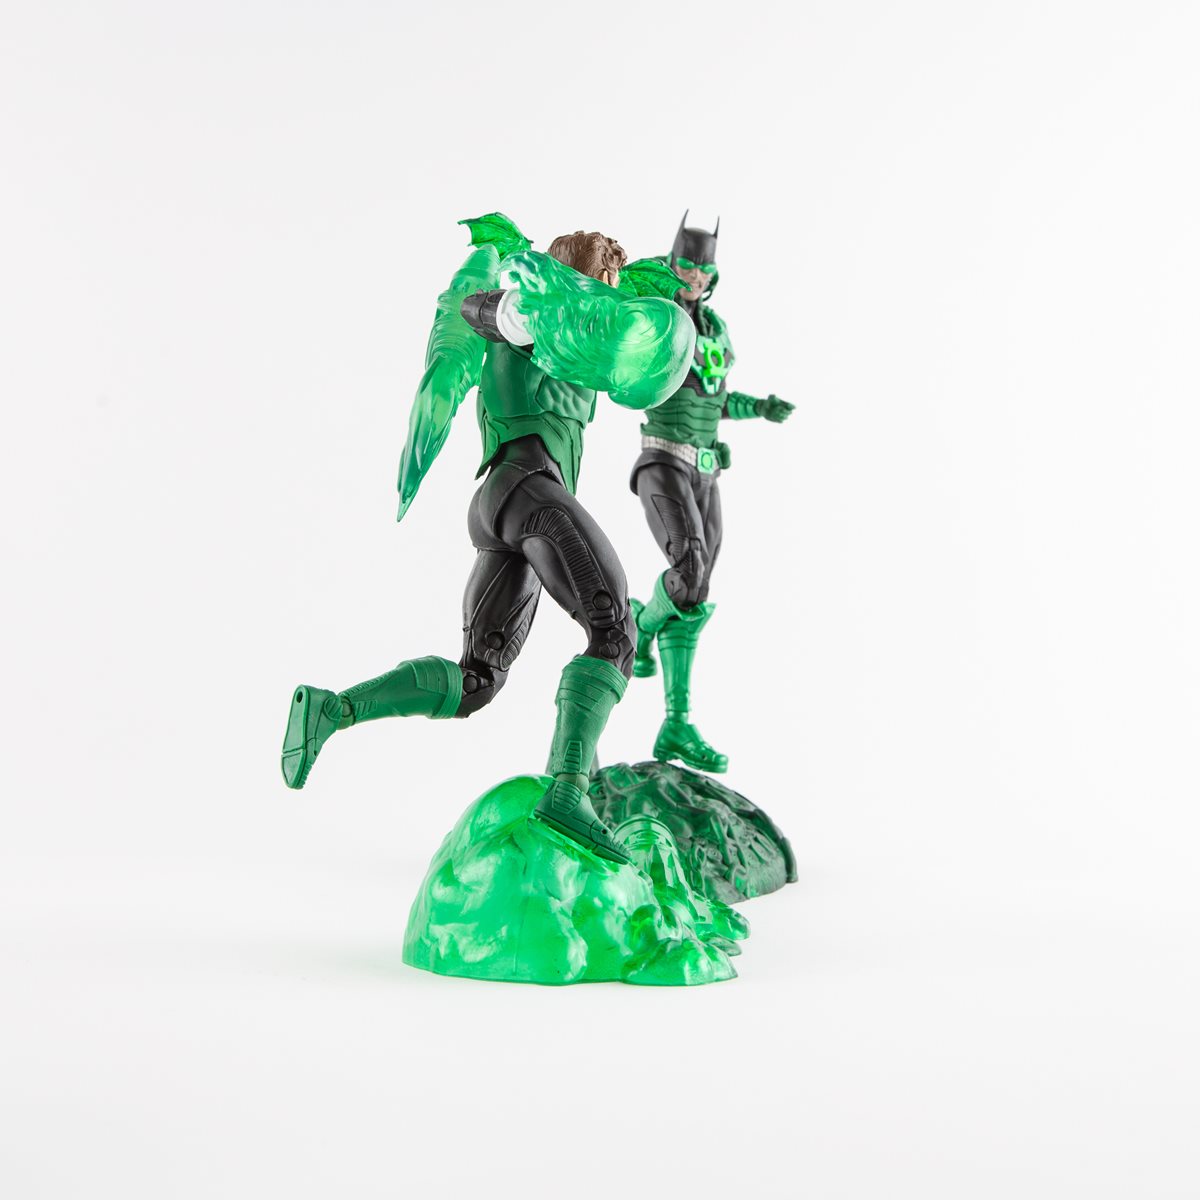 DC Green Lantern Action Figure 4-Pack